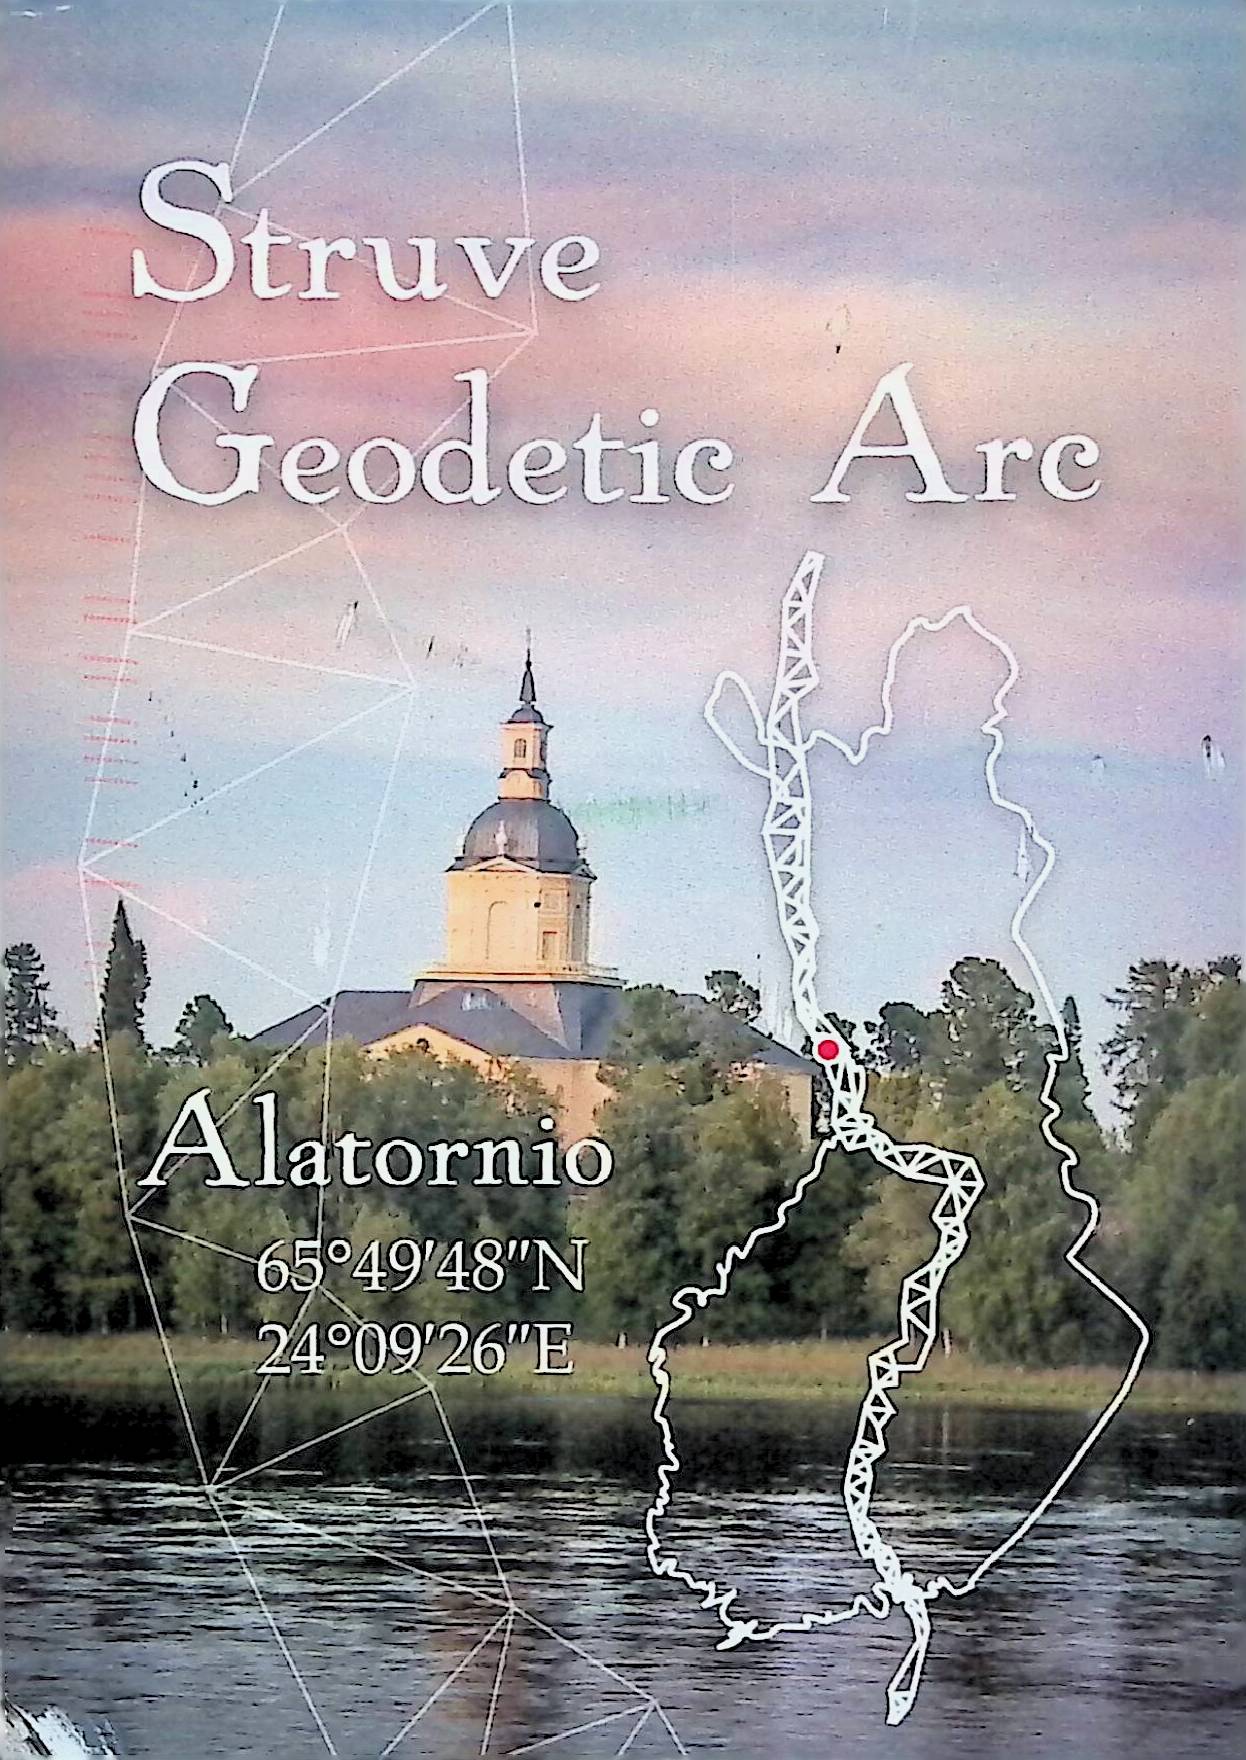 Viola79, Postcard FI-4129272 Received, UNESCO Struve Geodetic Arc - Alatornio, Finland (18 Mar 2022).jpg